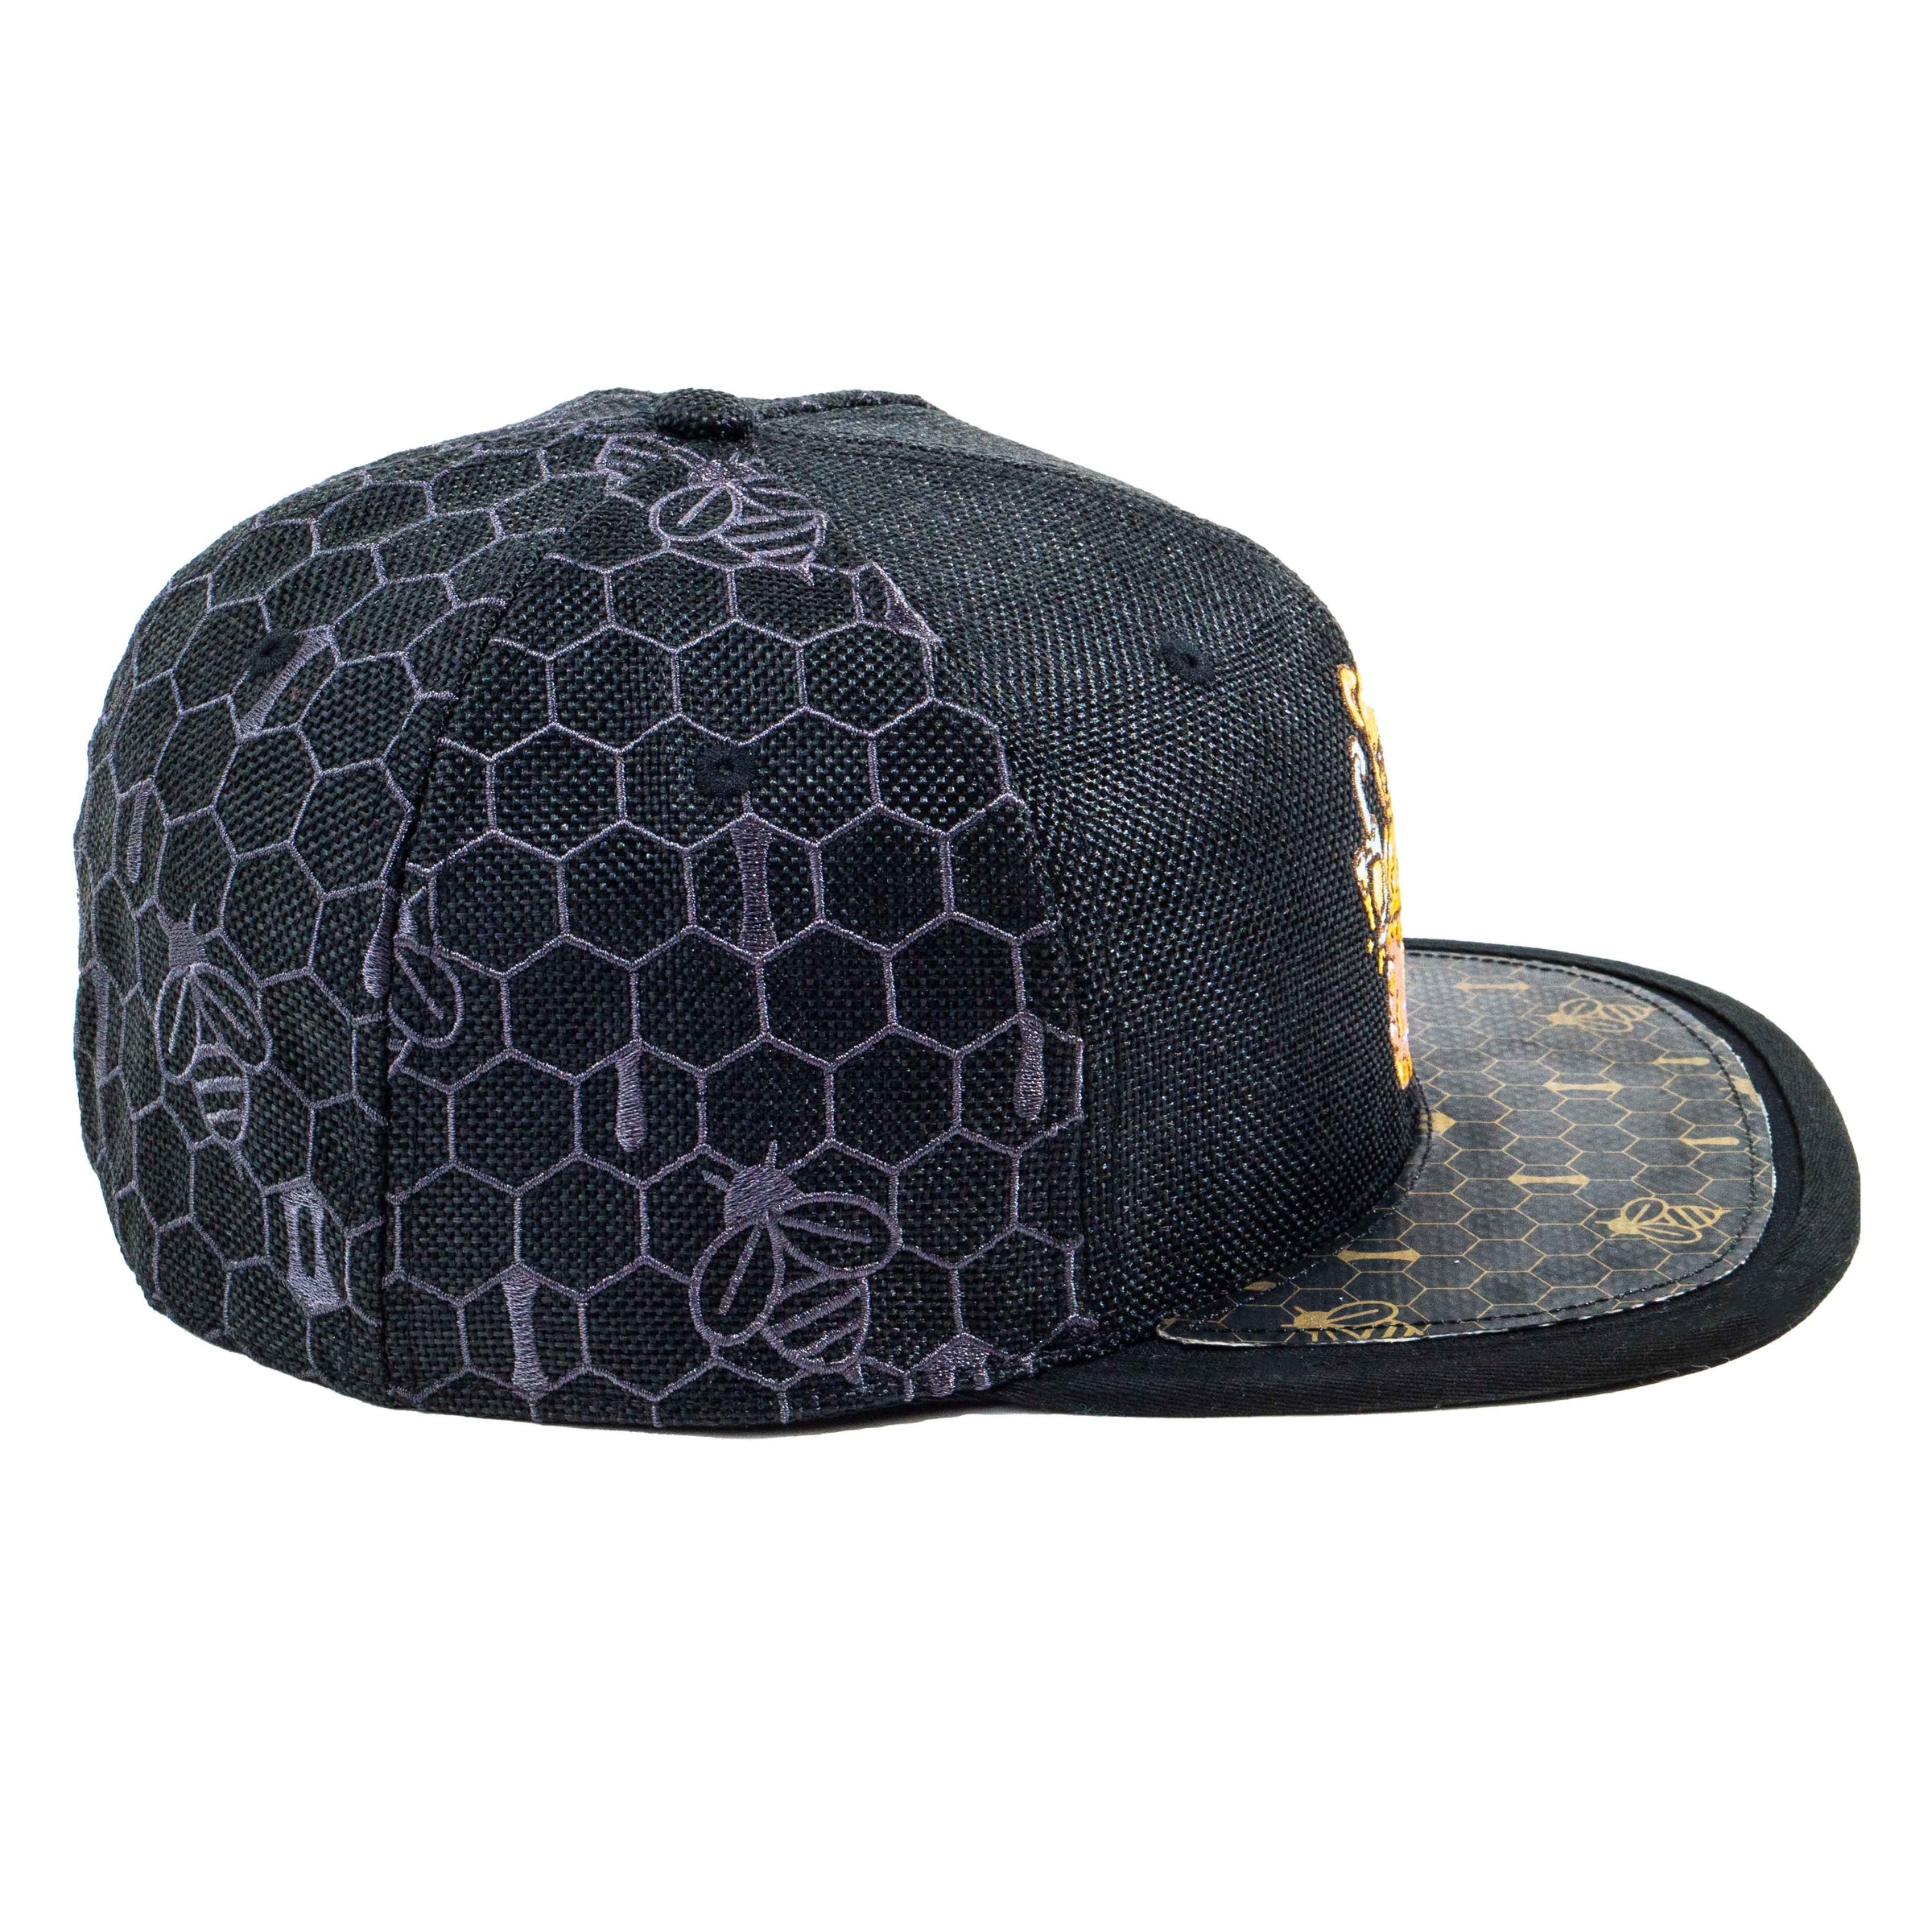 Honey Bear Black Fitted Hat